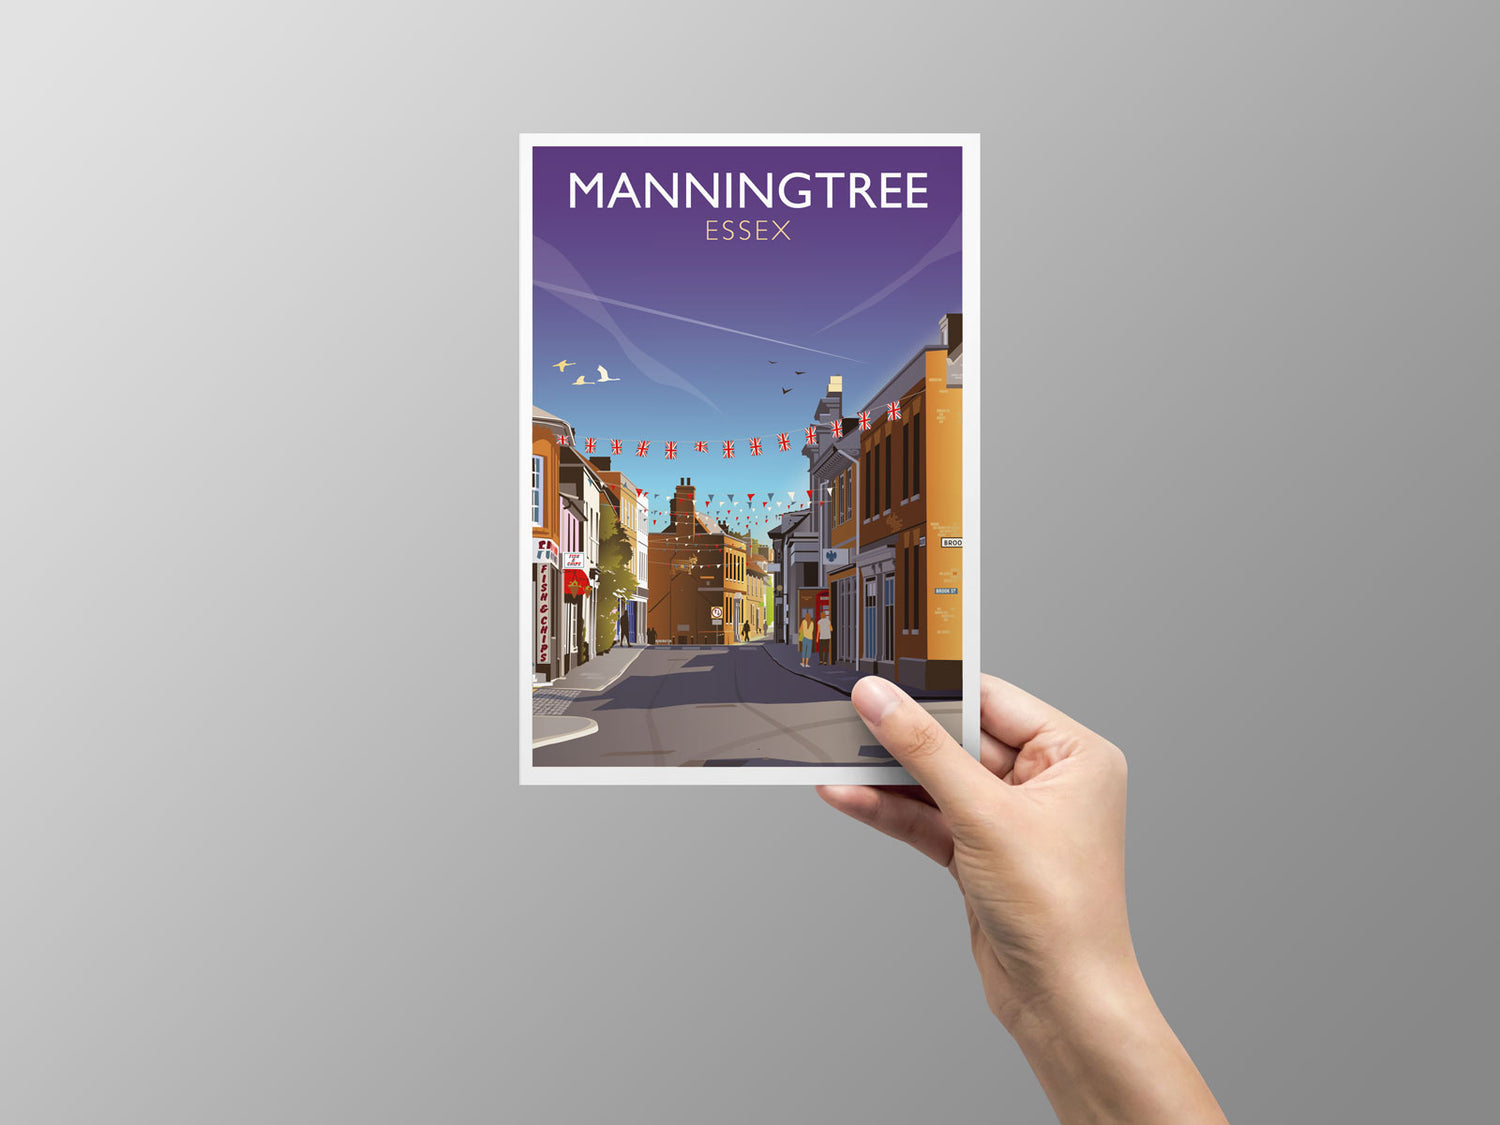 Manningtree, Tendring Greeting Card